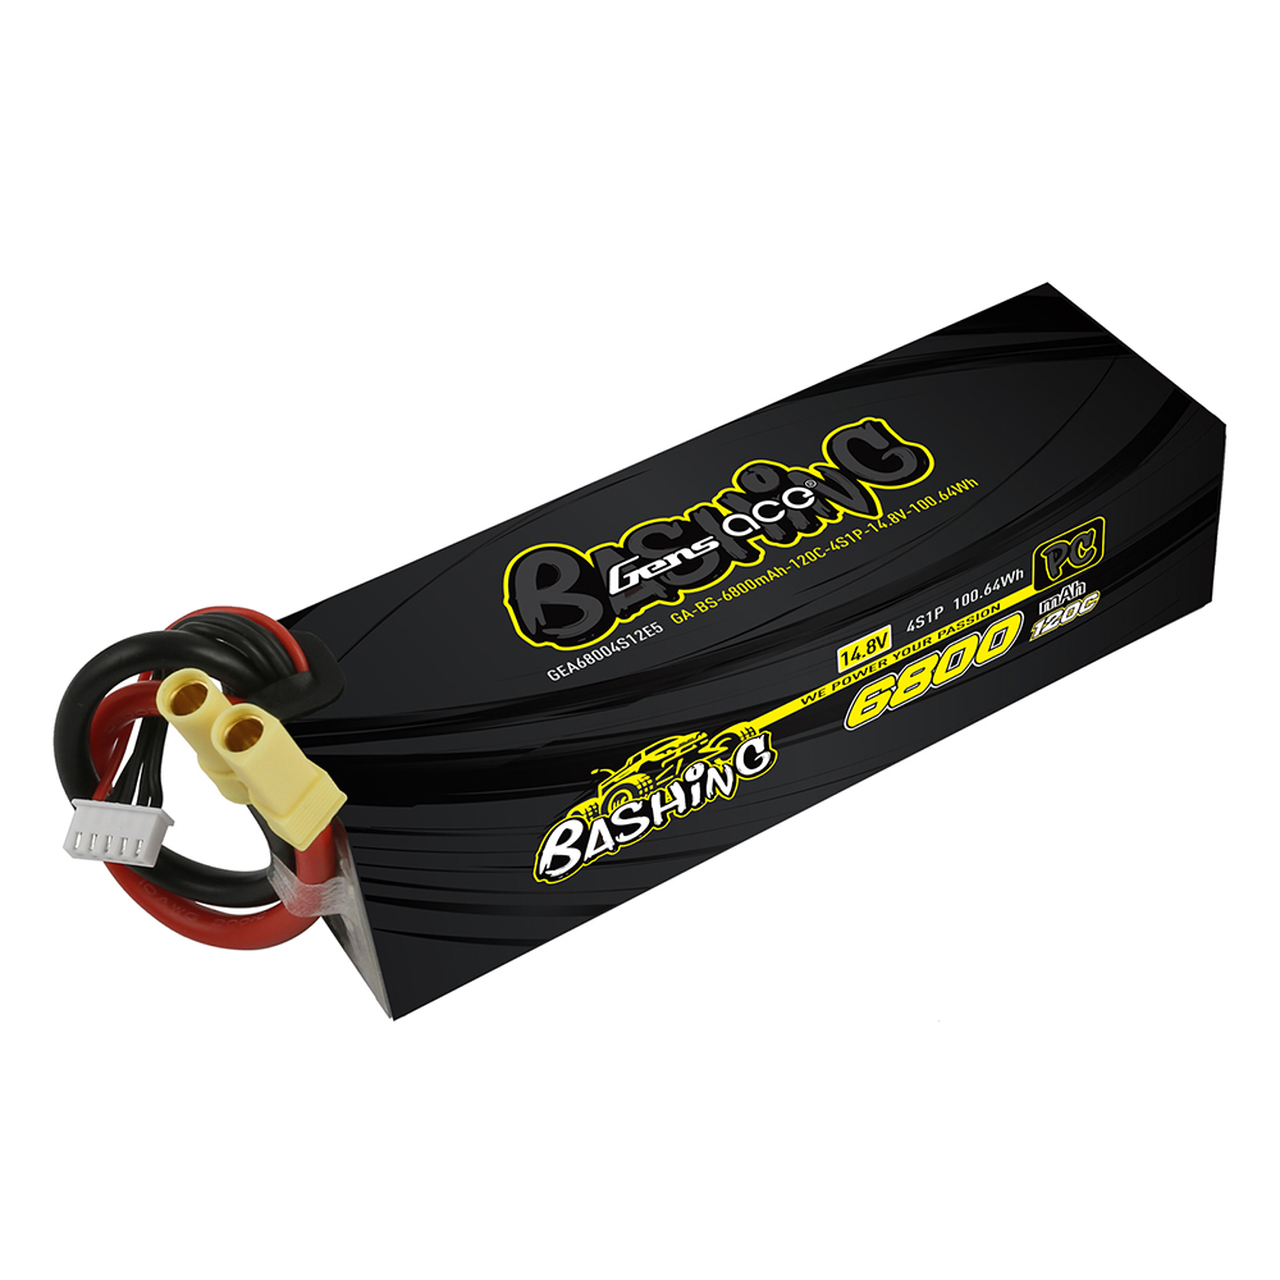 Gens Ace Bashing Series 6800mAh 14.8V 120C 4S1P Lipo Battery Pack With EC5 Plug